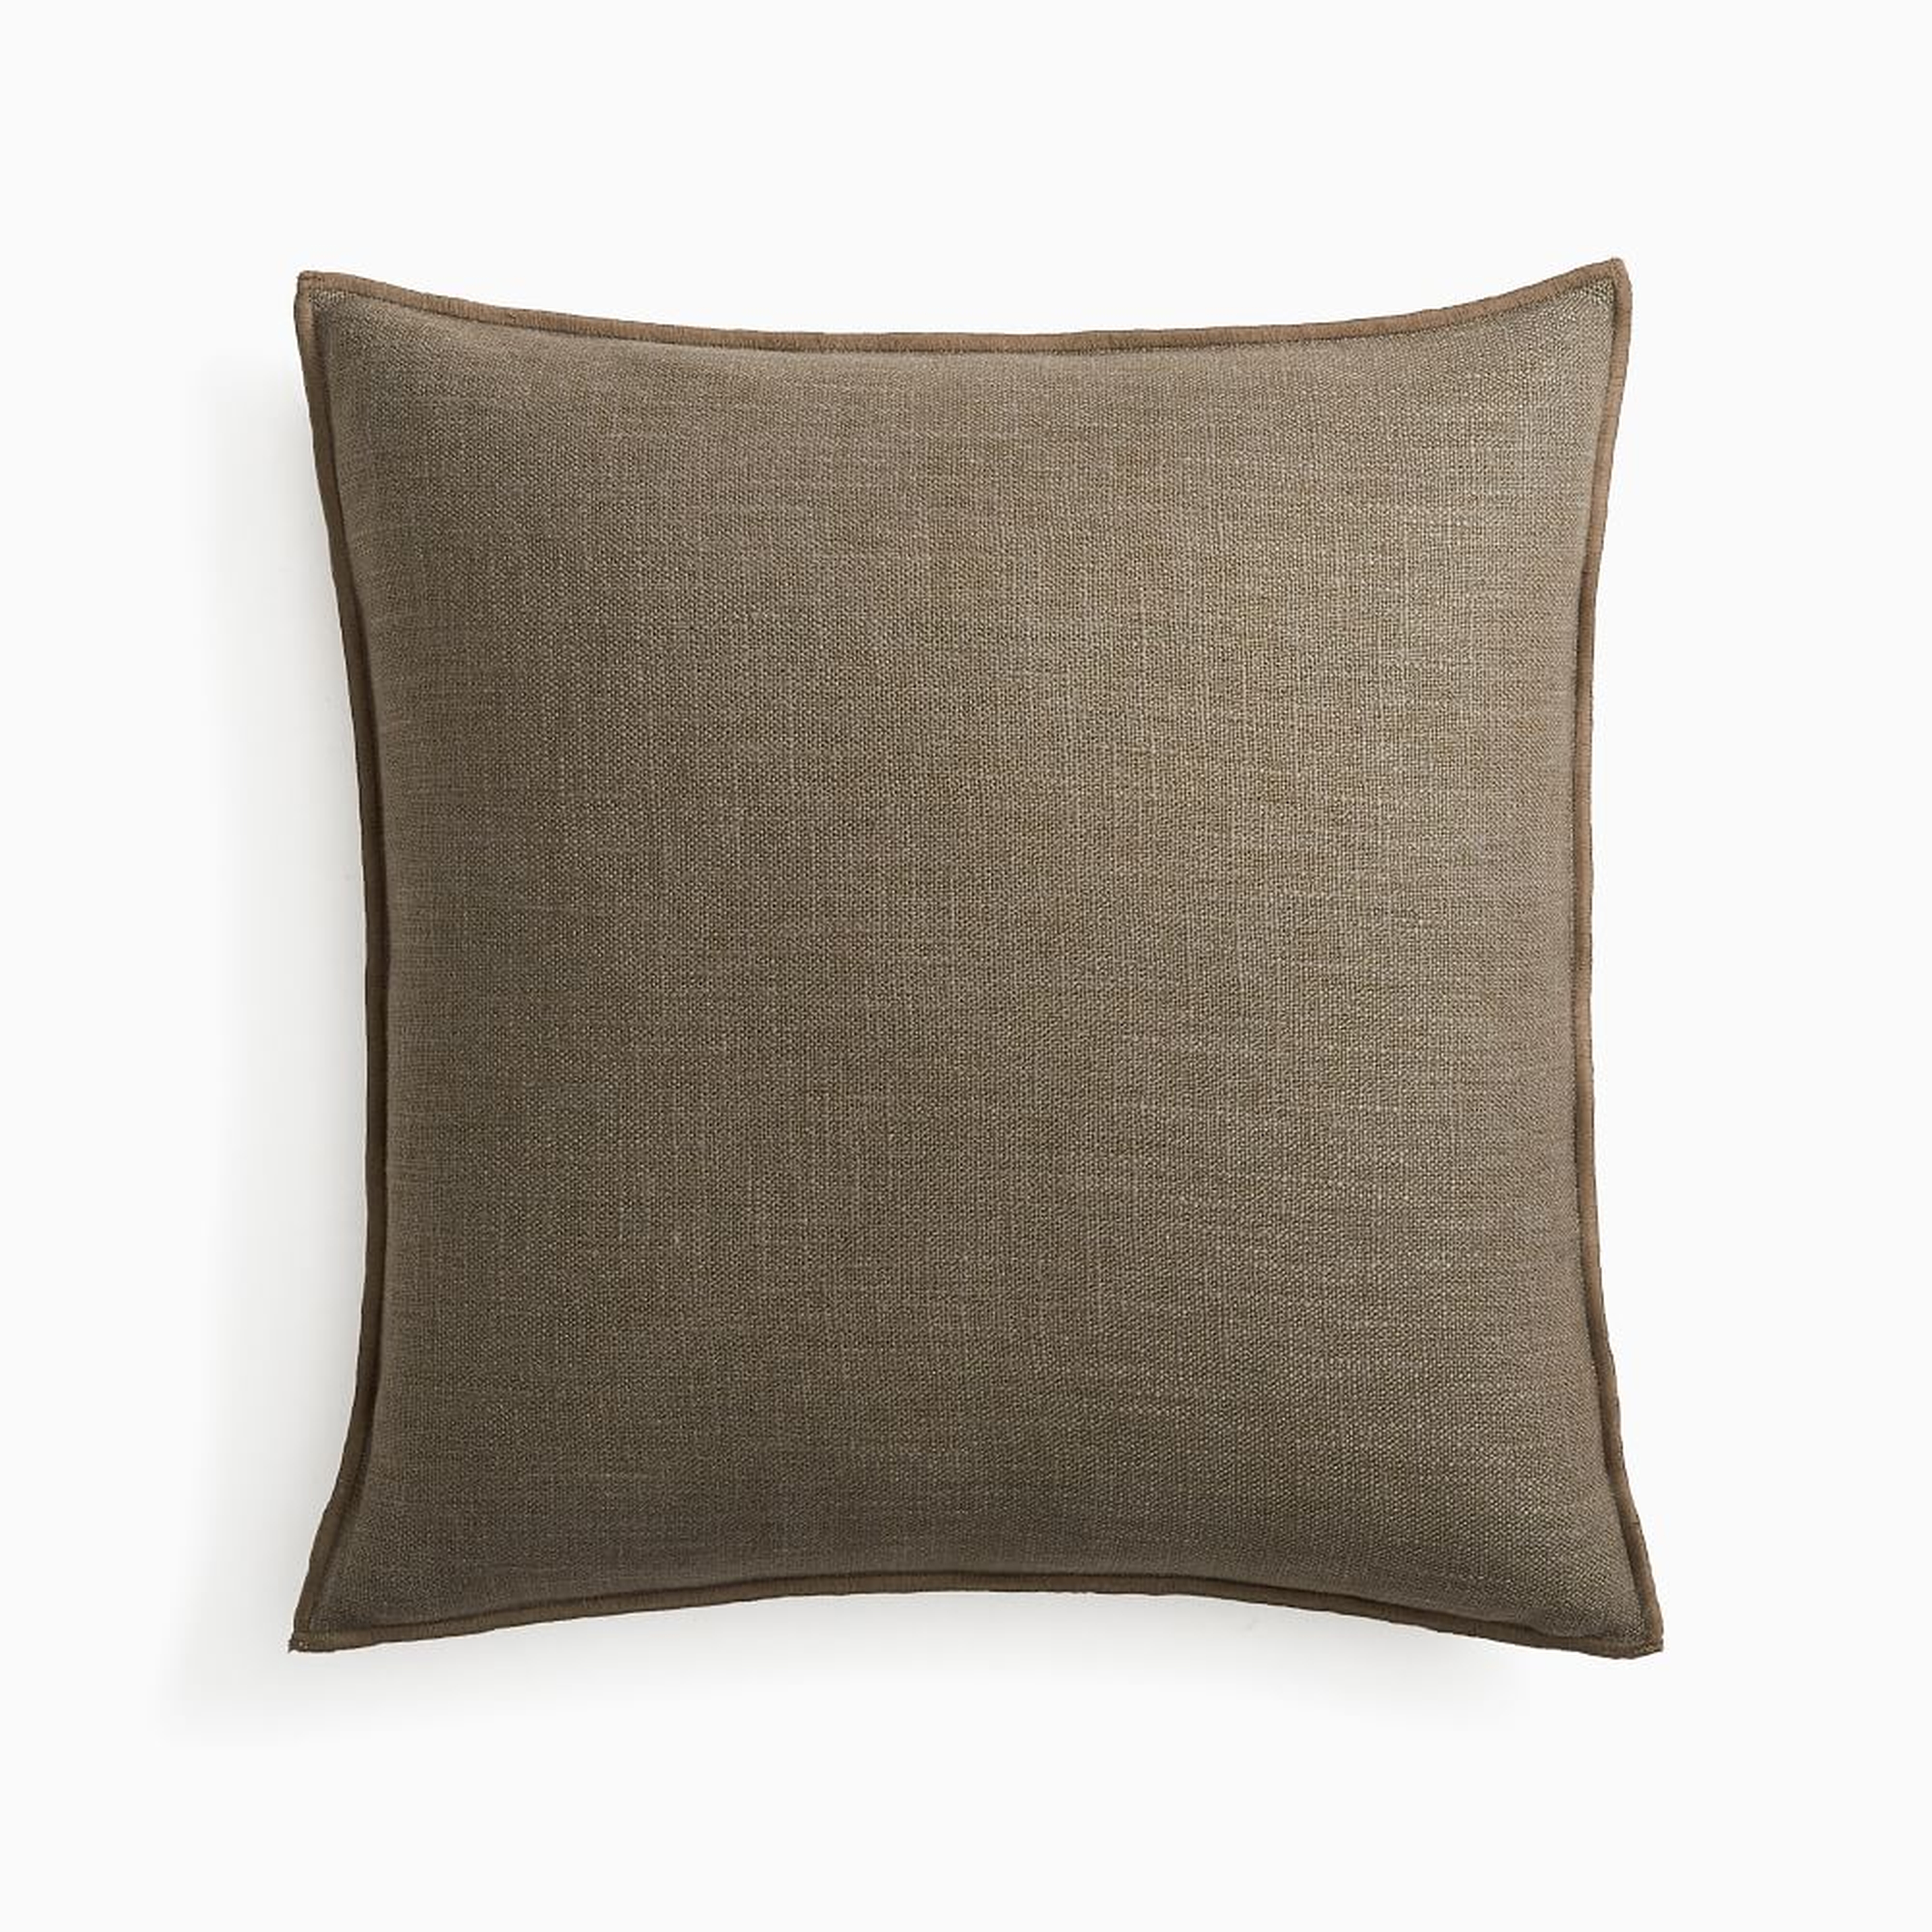 Classic Linen Pillow Cover, 20"x20", Dark Olive - West Elm